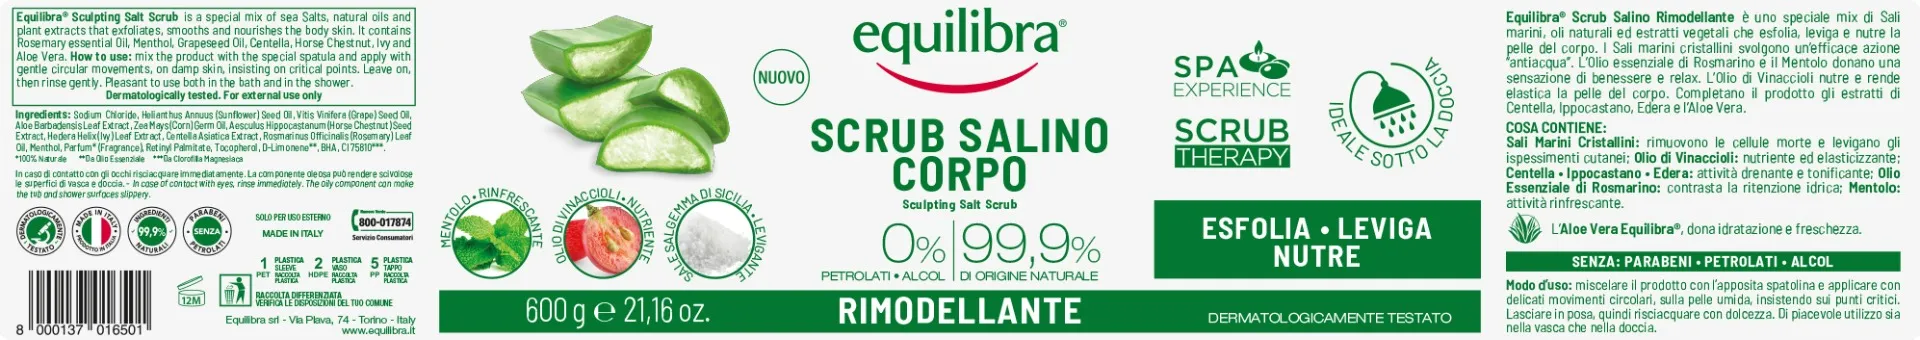 Equilibra Scrub Salino Rimodellante 600 G Esfolia, Leviga e Nutre